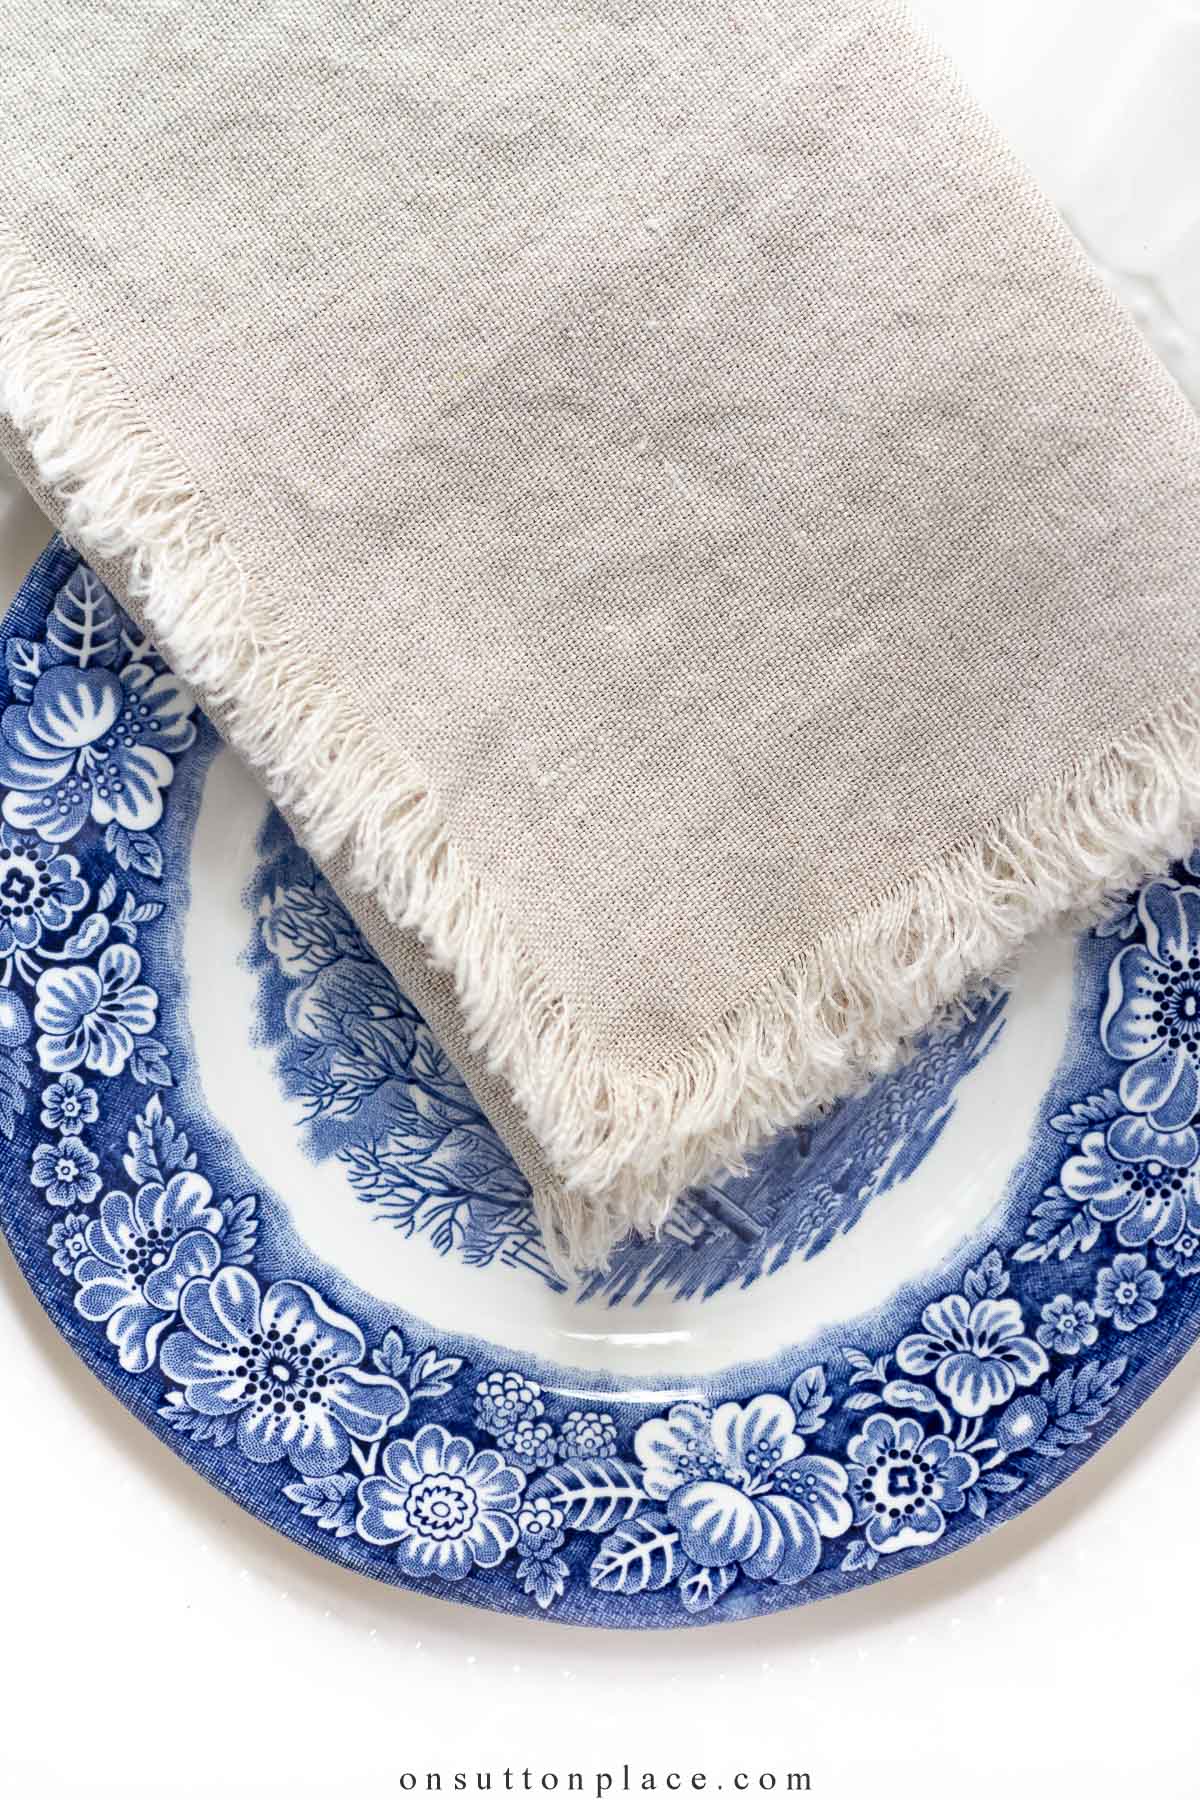 https://www.onsuttonplace.com/wp-content/uploads/2022/10/diy-cloth-dinner-napkin-linen-with-fringe.jpg